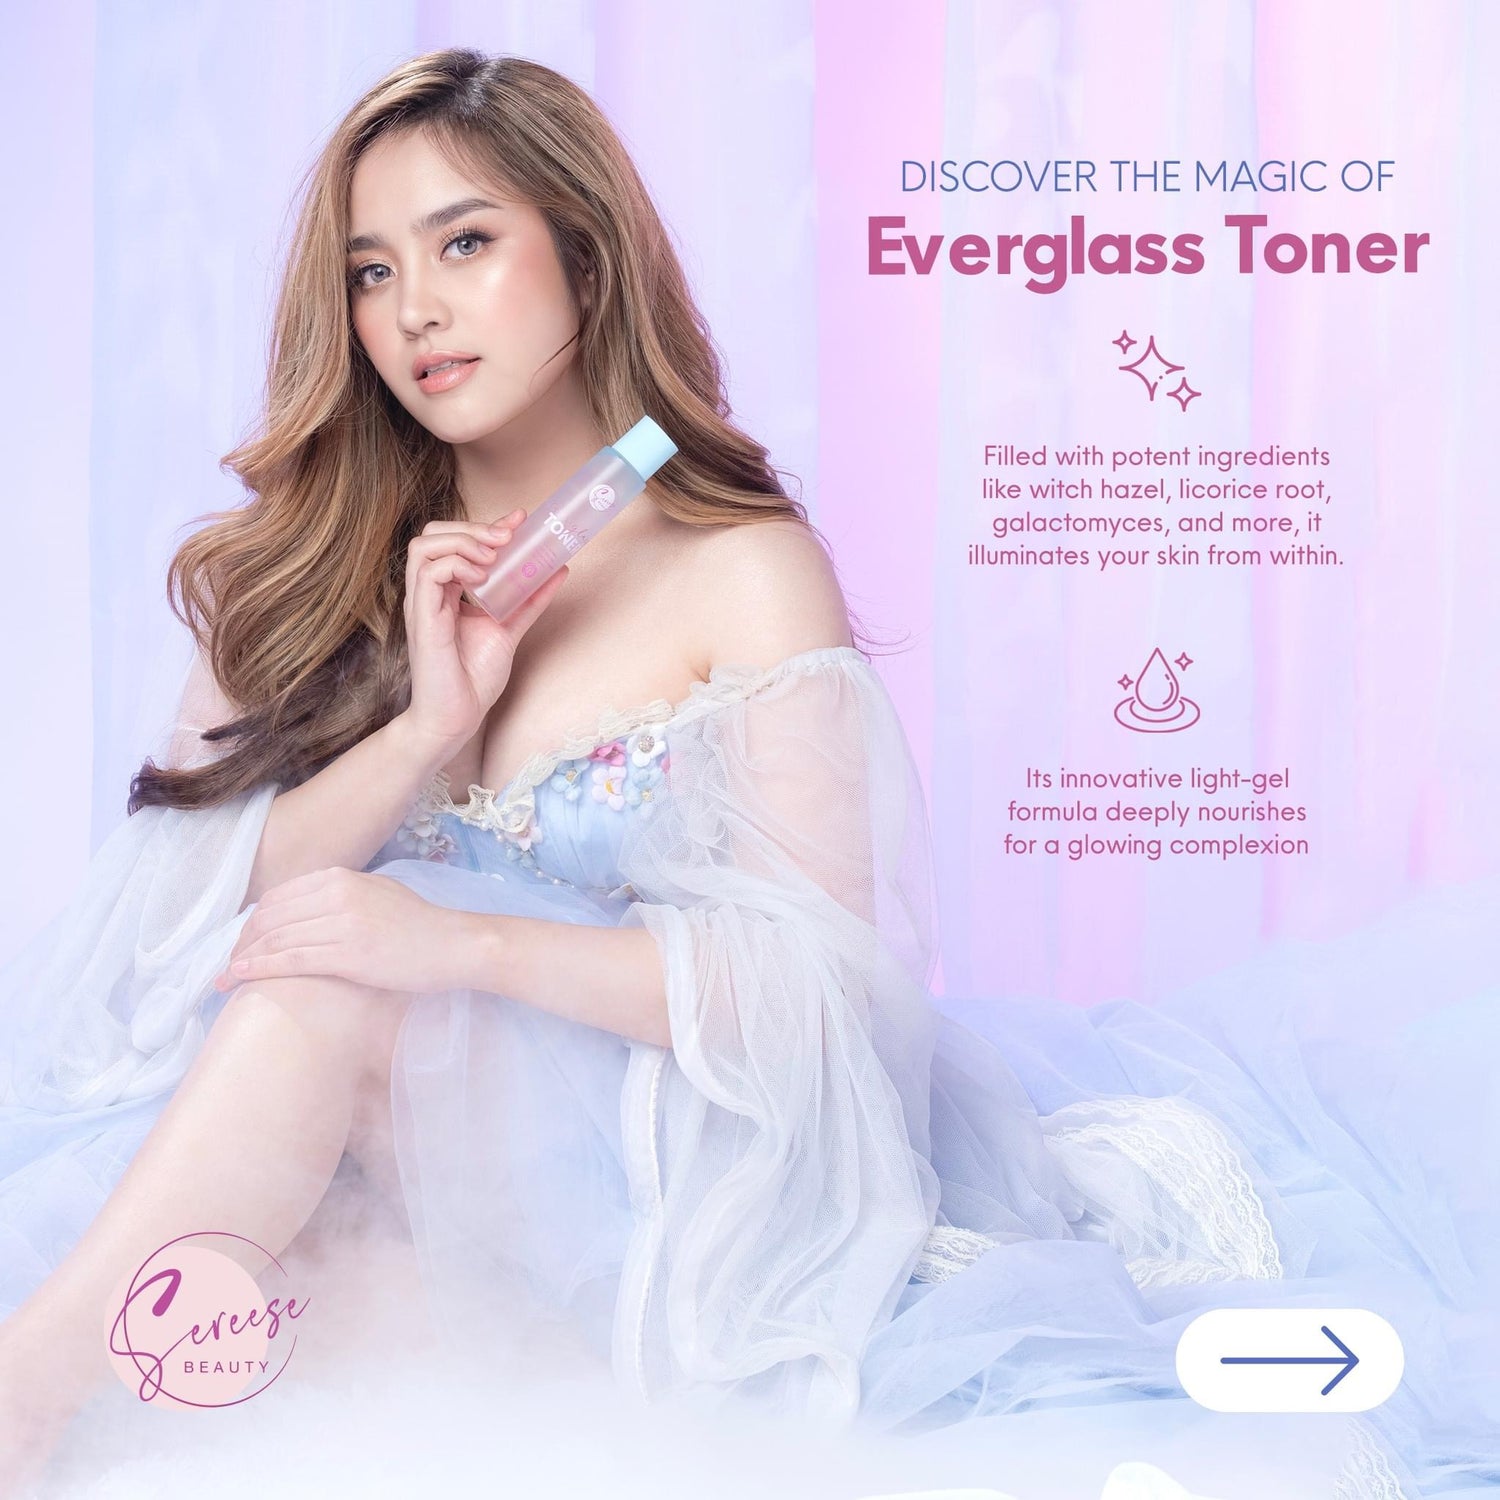 Sereese Beauty Everglass Toner - True Beauty Skin Essentials